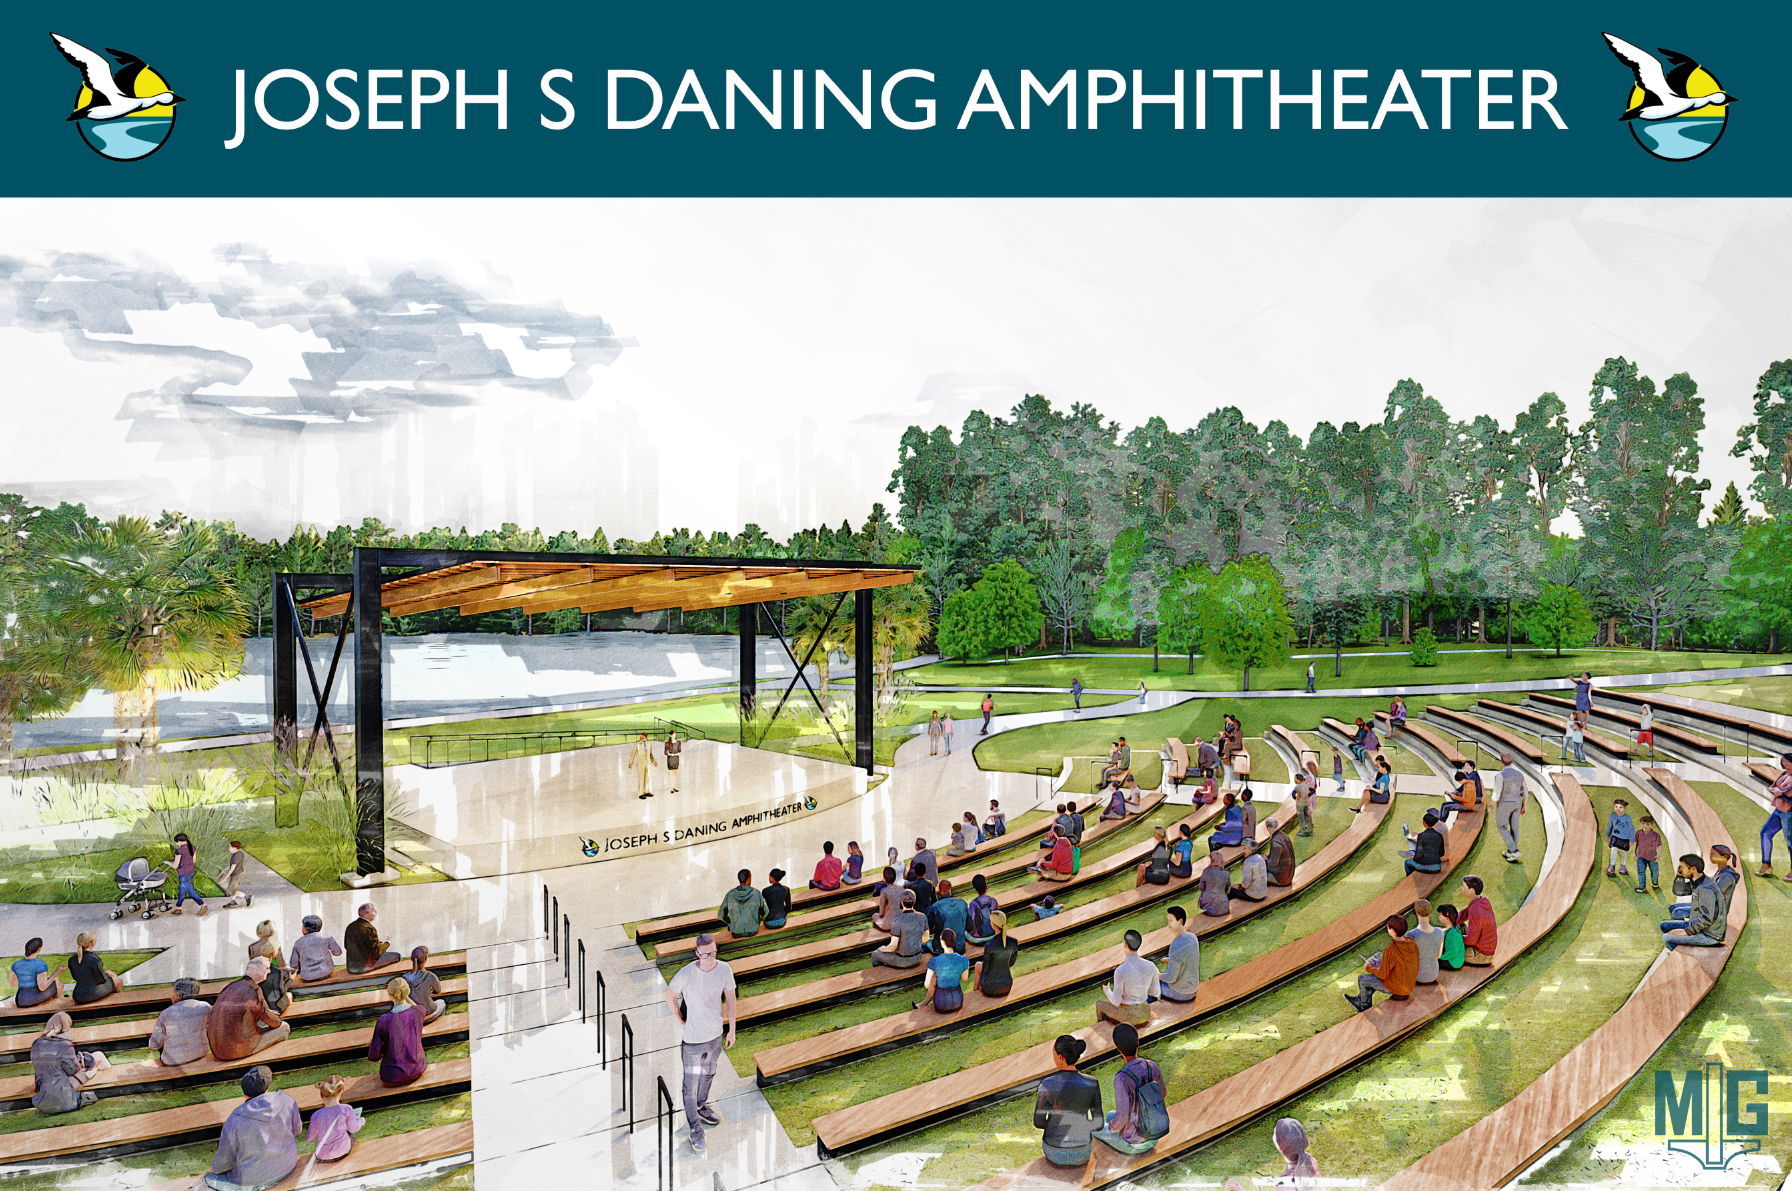 Amphitheater rendering